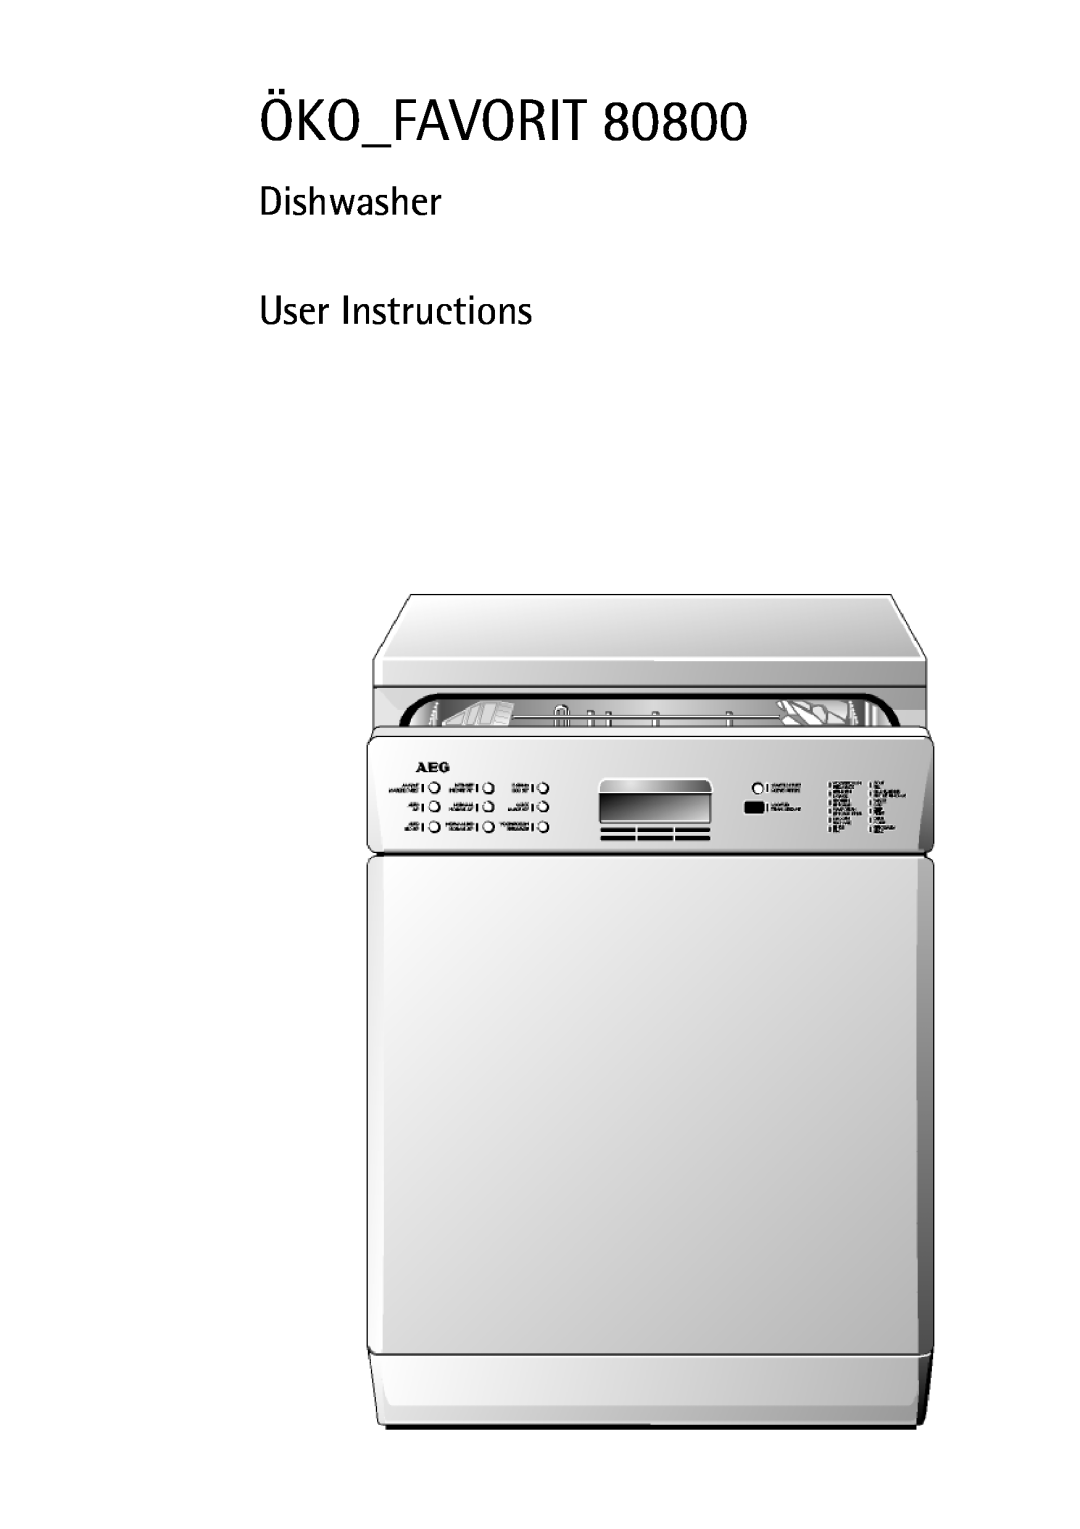 AEG 80800 manual Ökofavorit, Dishwasher User Instructions 